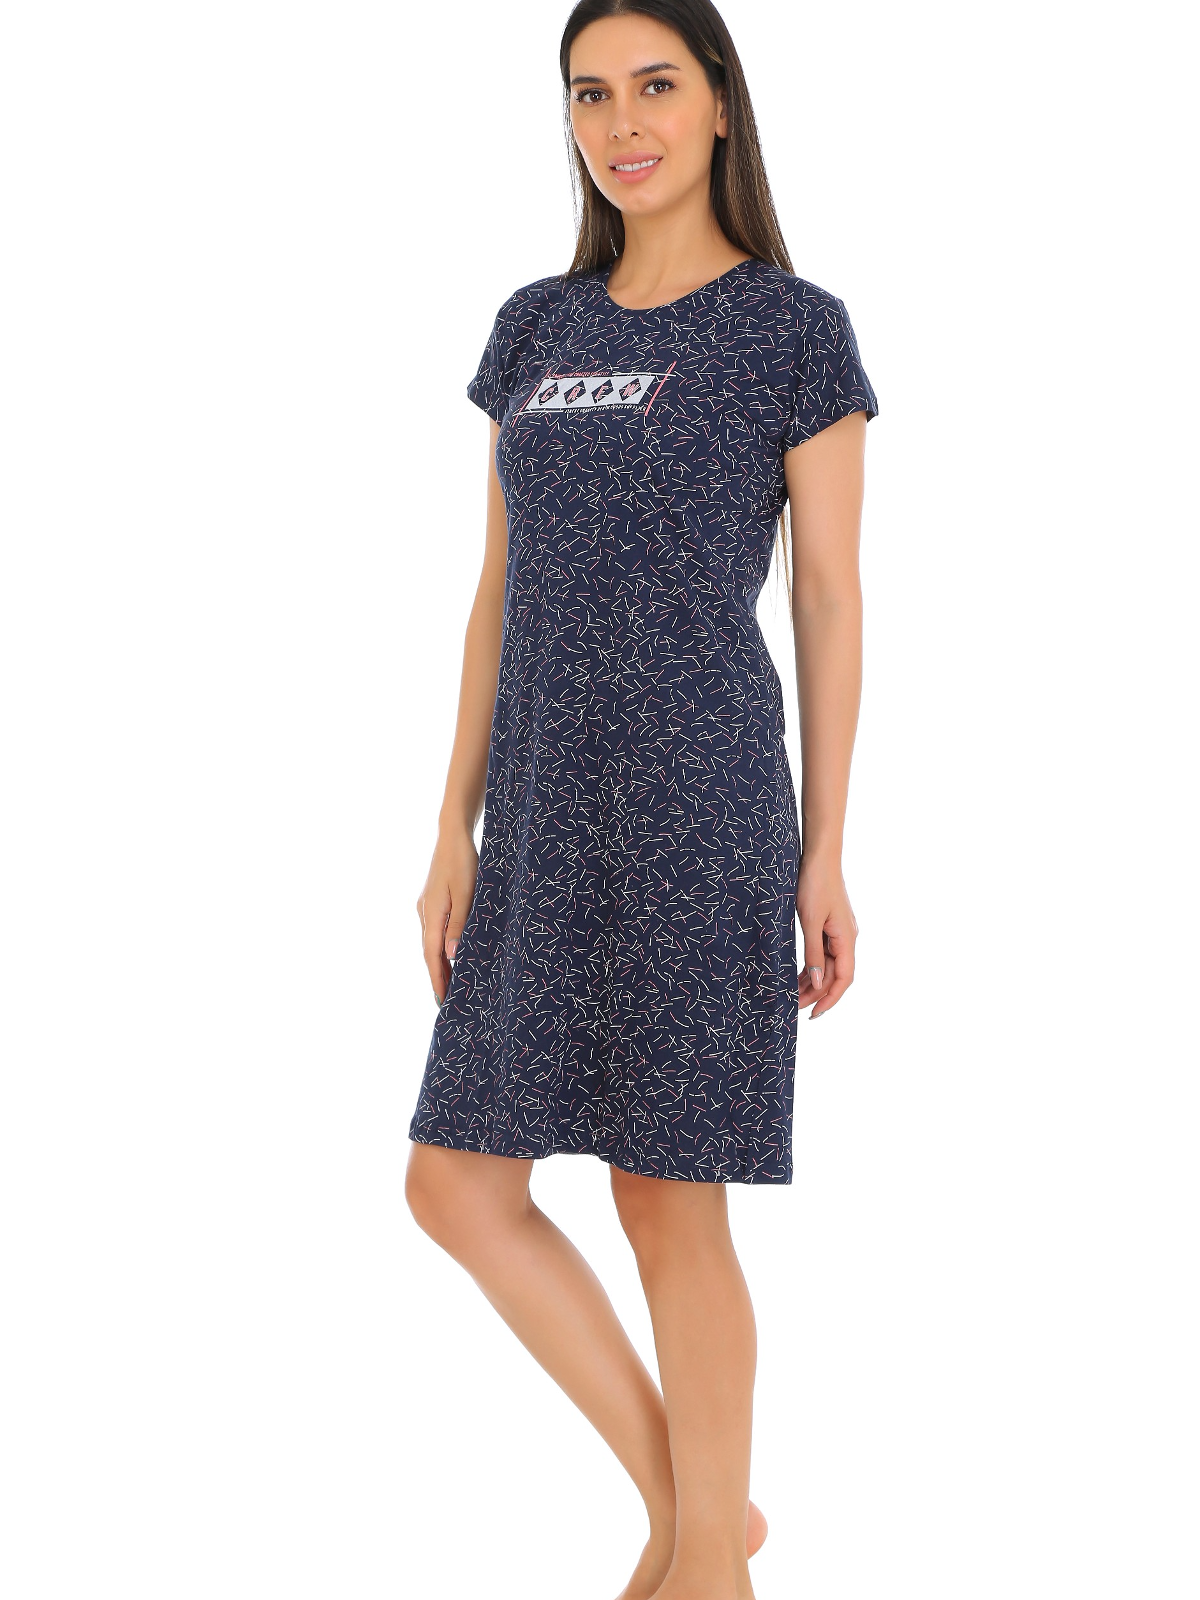 Gudnini Printed Knee Length Mini Dress,Printed Short Night Dress for Women Relax Nightgown Sleepwear Dress Print Lounge Wear